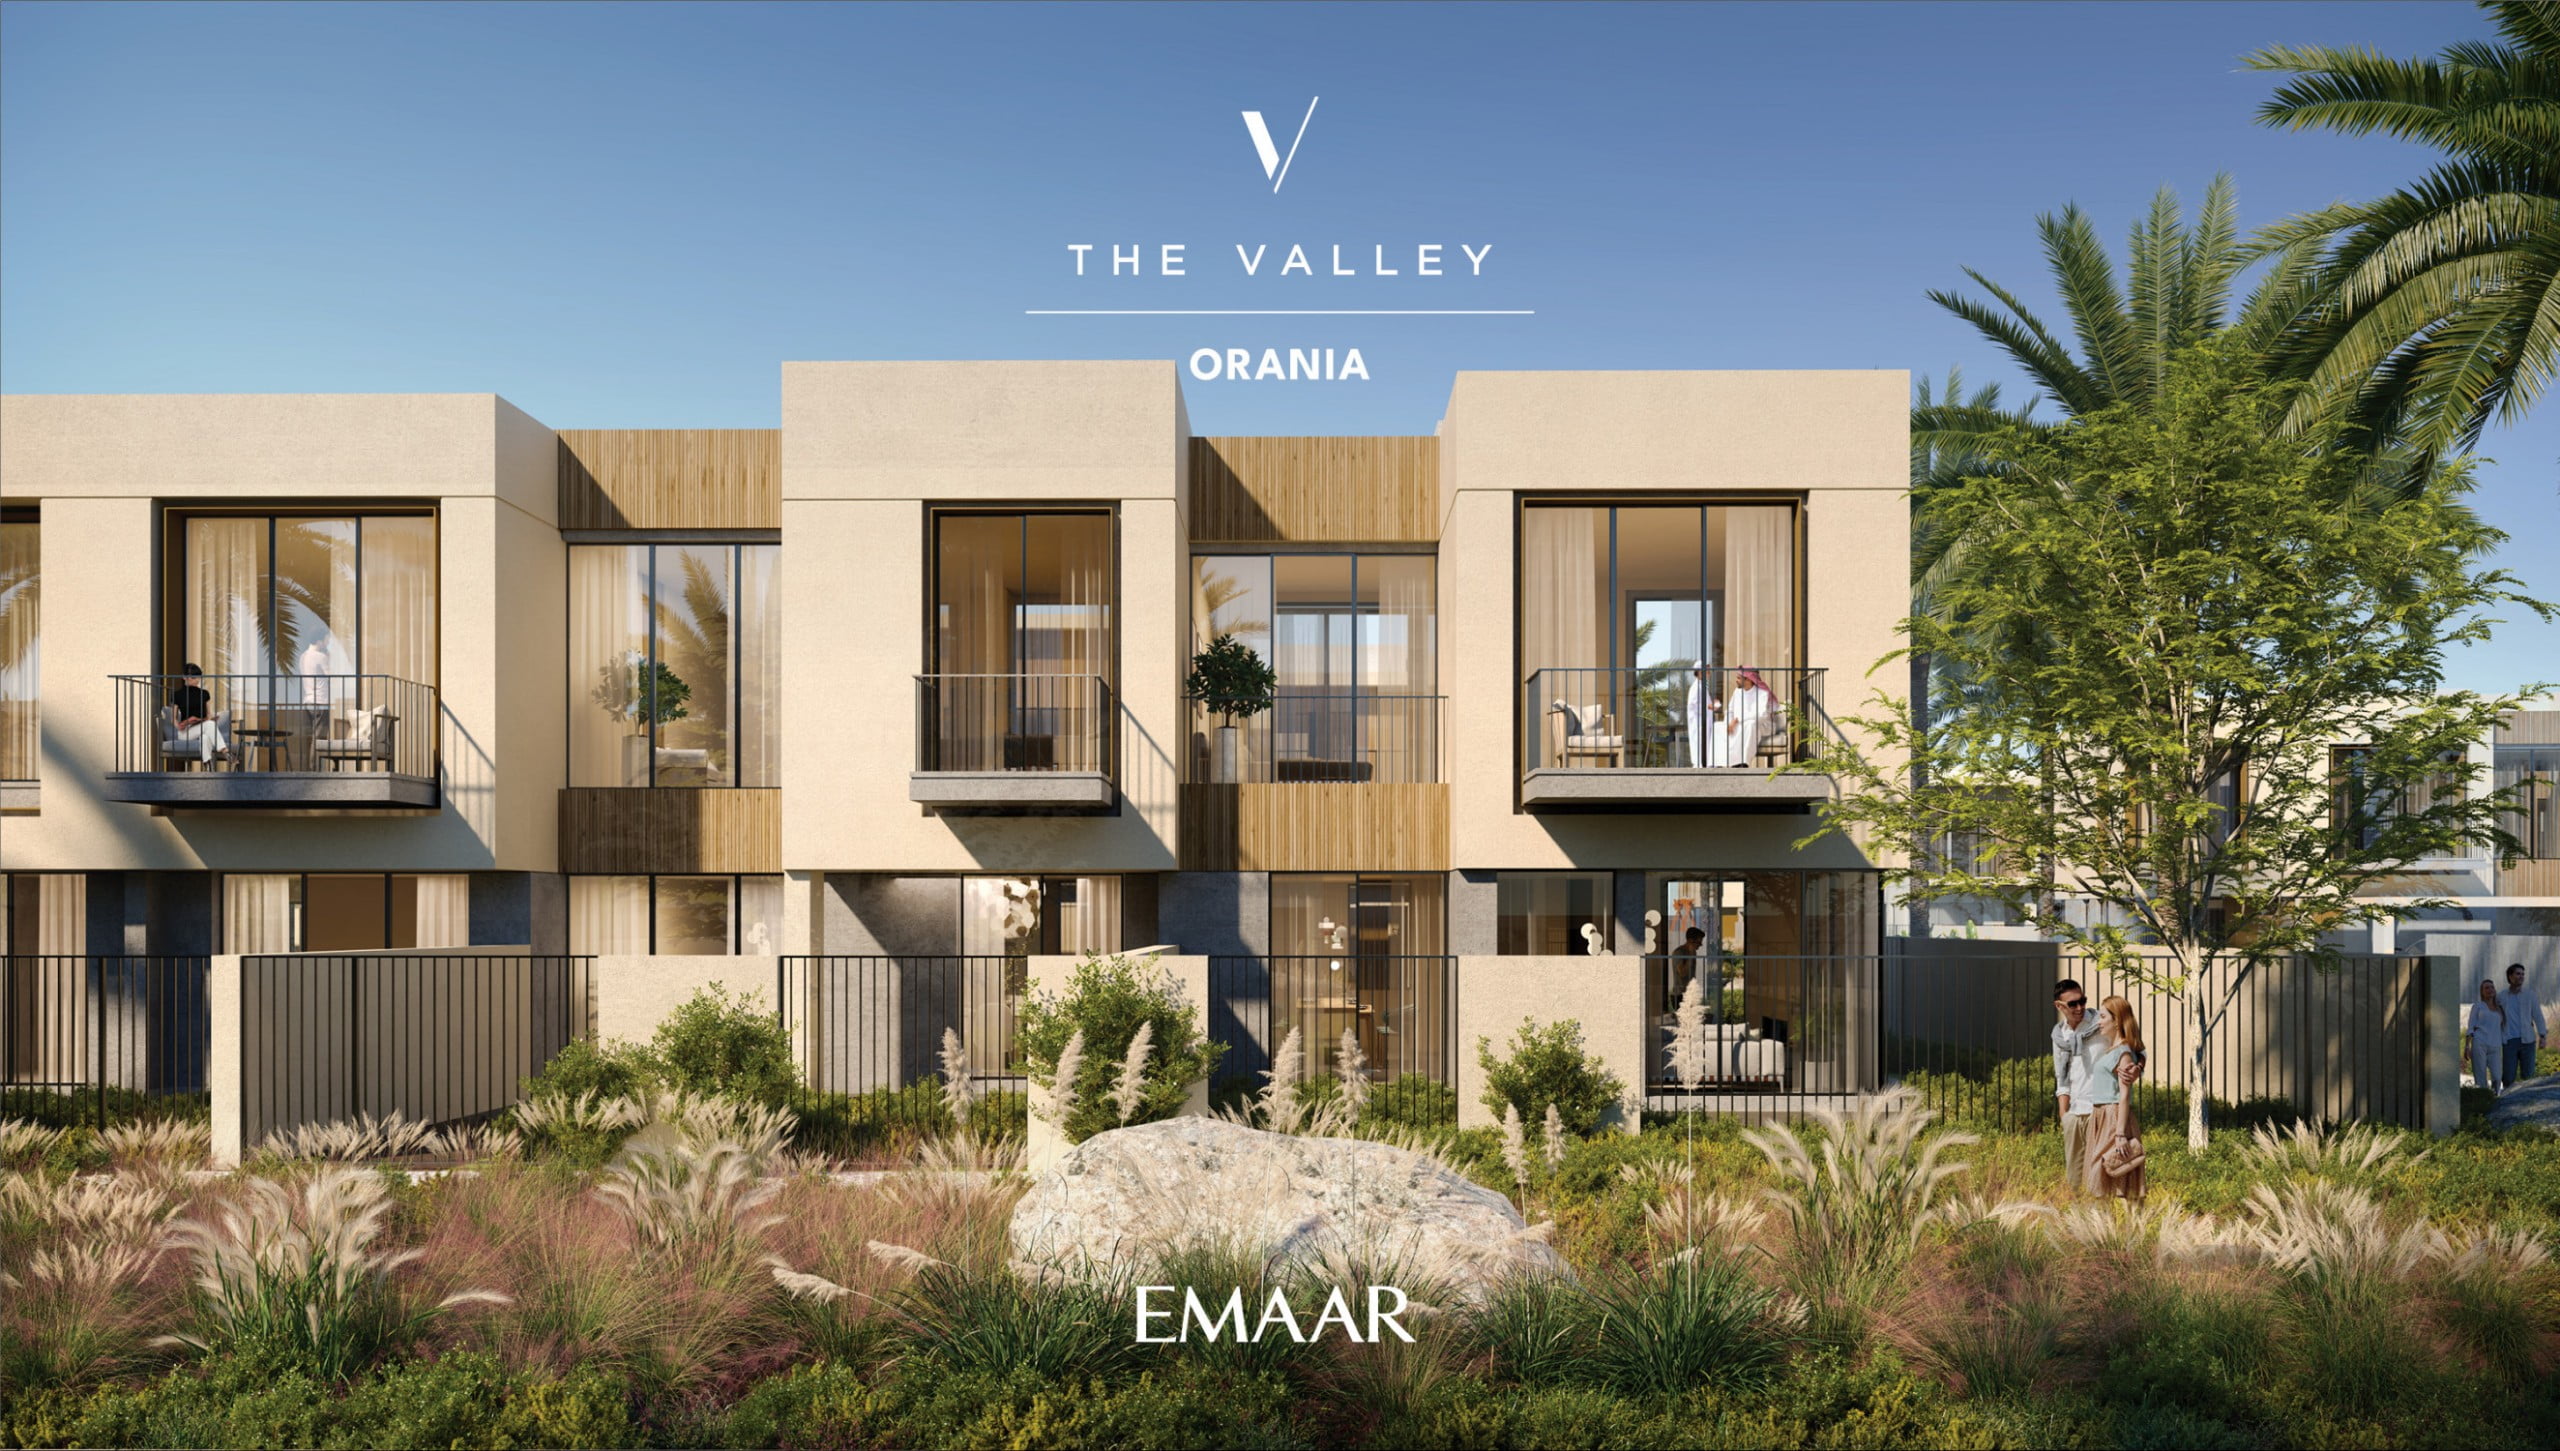 ORANIA THE VALLEY EMAAR 05 scaled - Immobilier Dubai